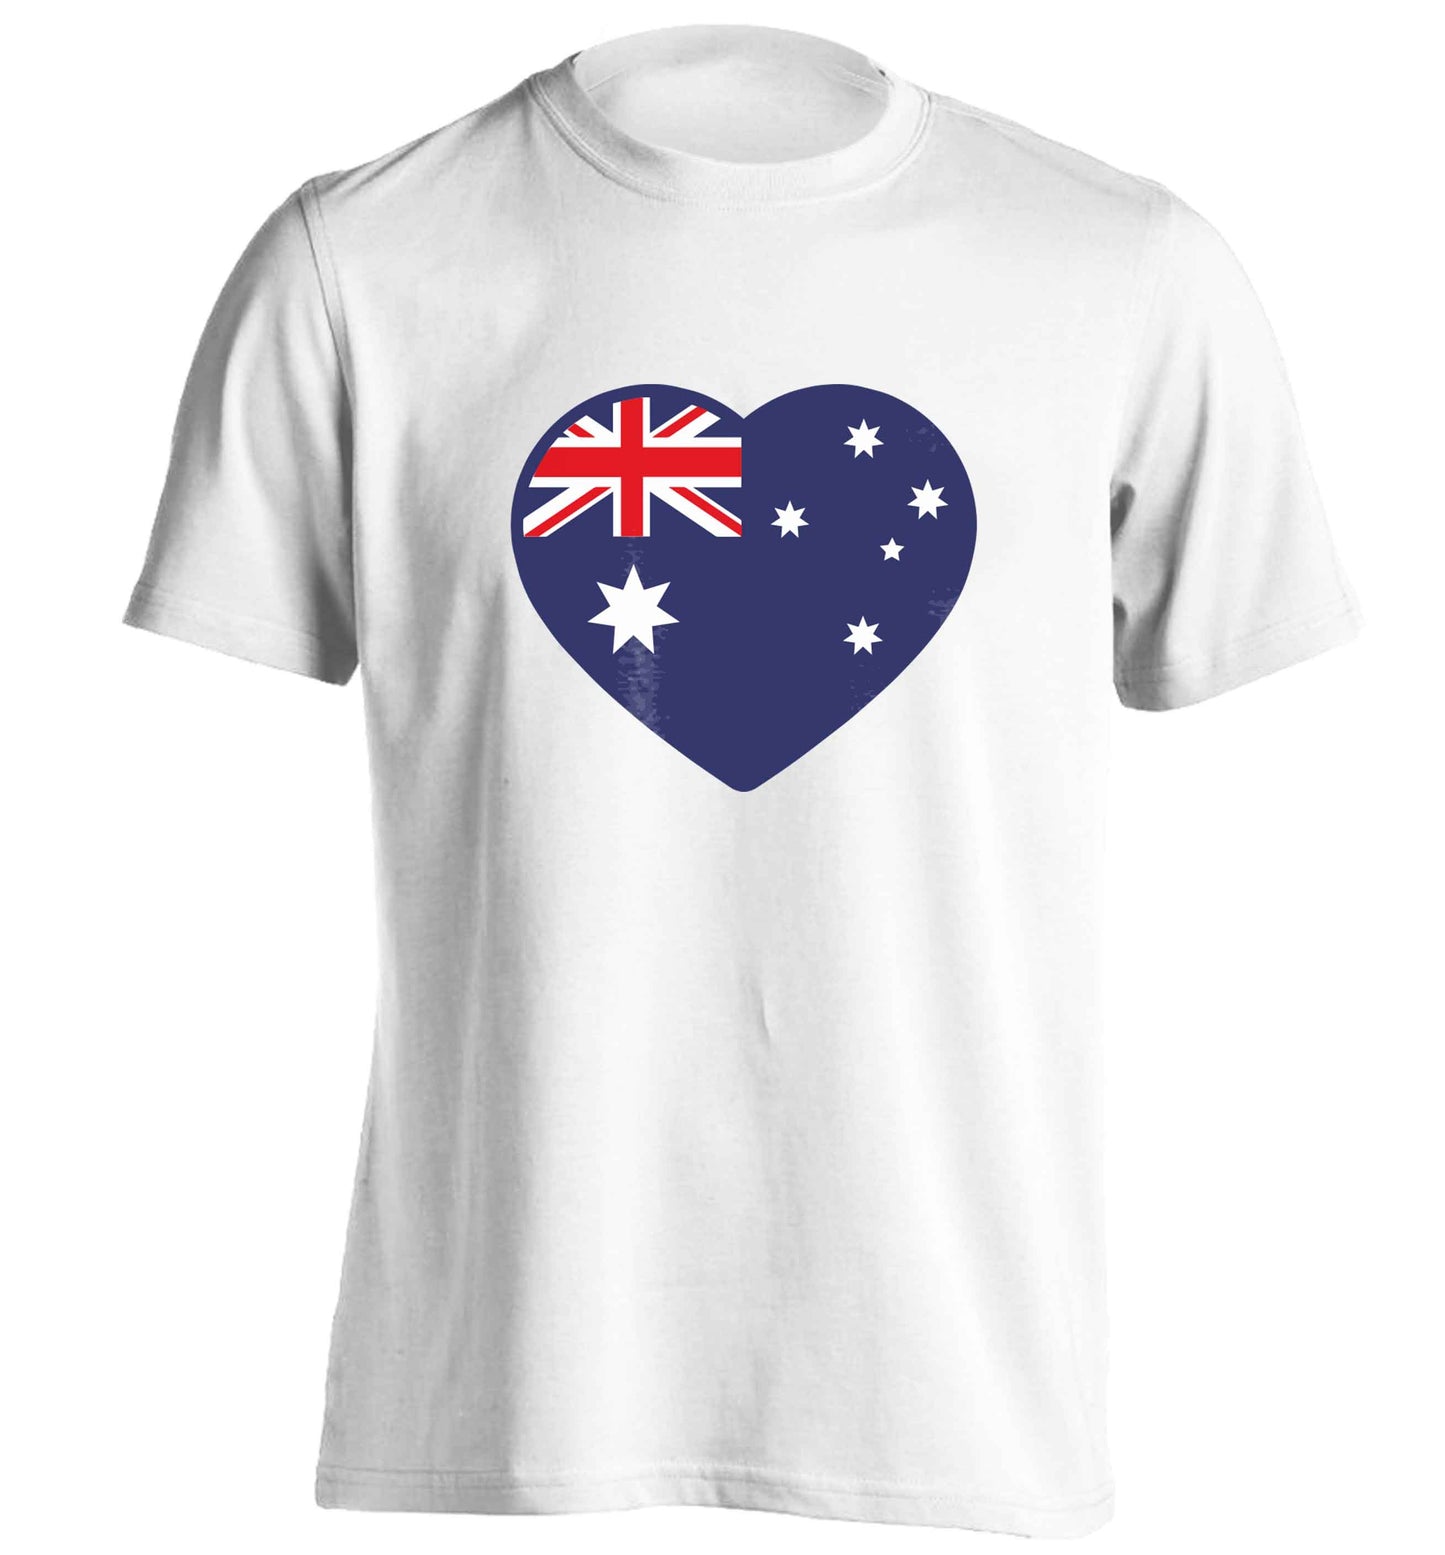 Australian Heart adults unisex white Tshirt 2XL